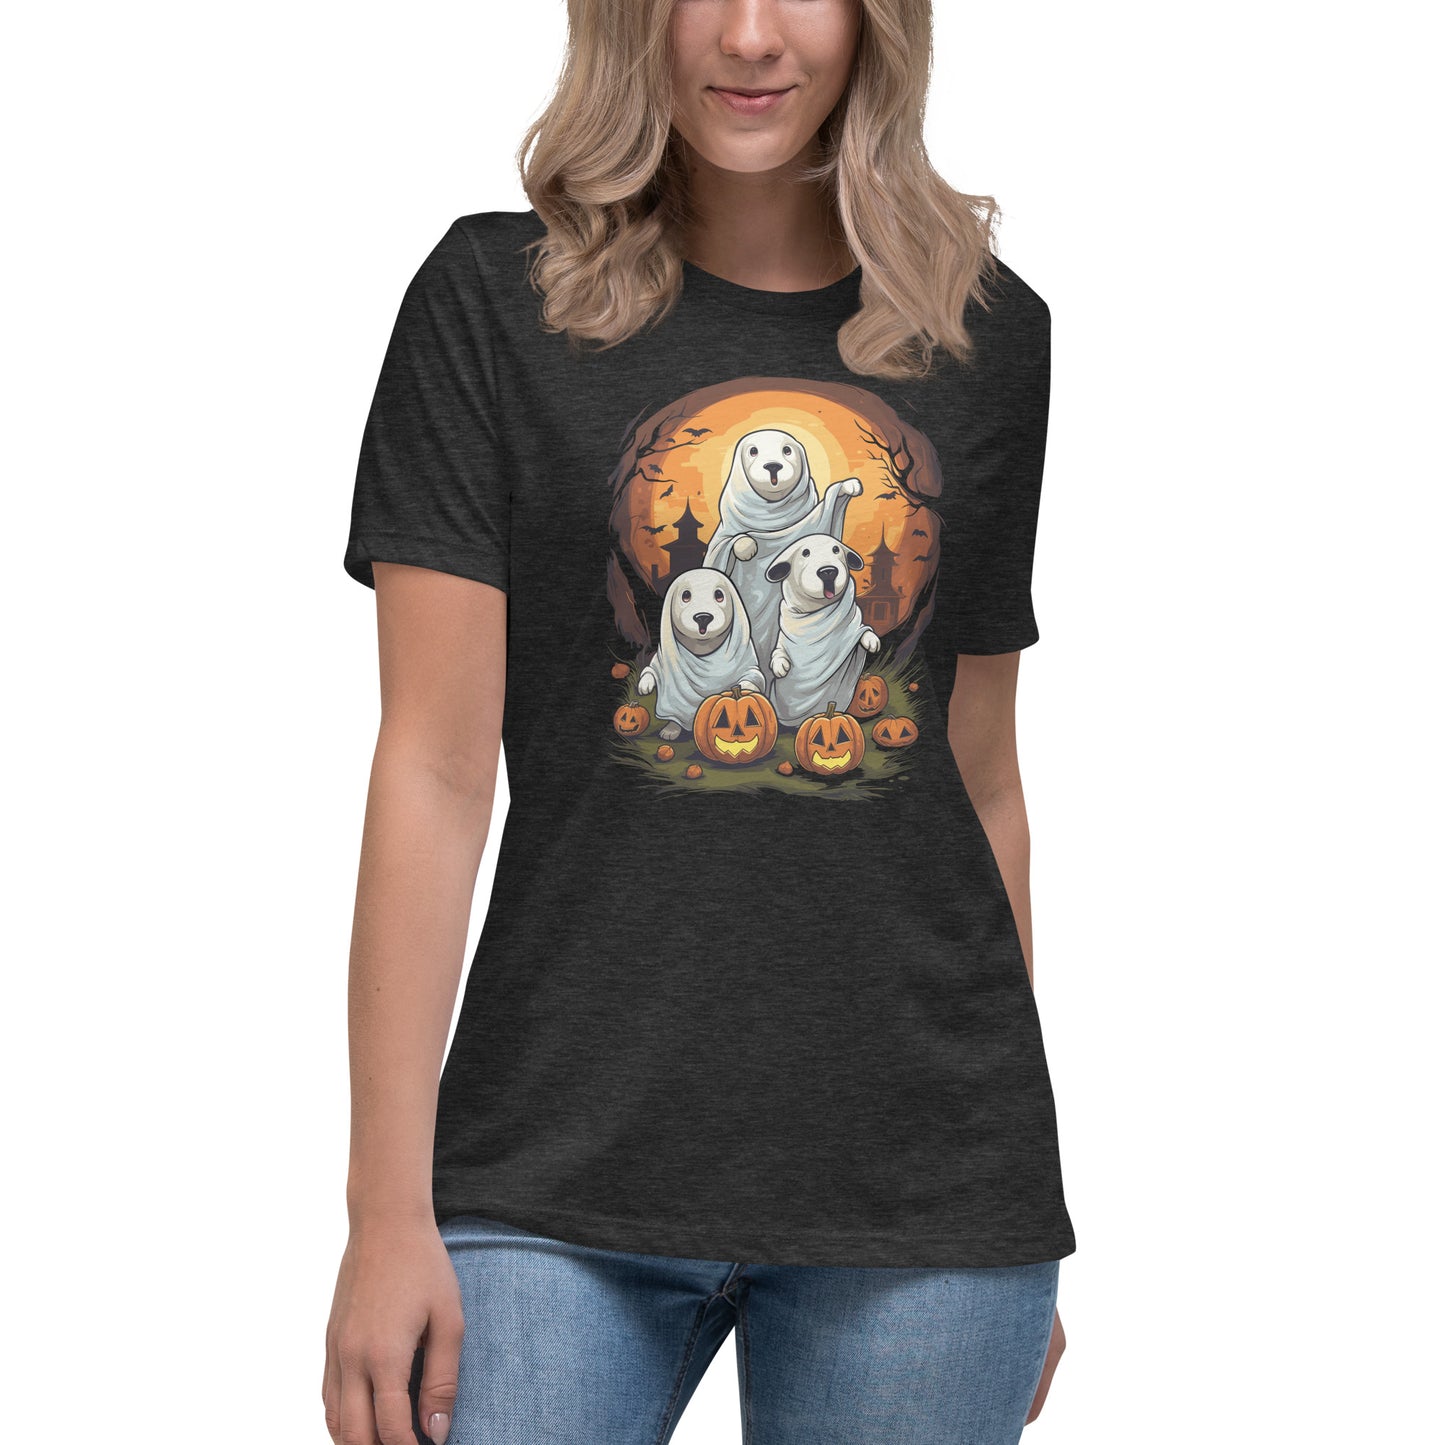 Dog Ghosts Tshirt, Pumpkins Halloween Fall Men Women Adult Aesthetic Graphic Crewneck Short Sleeve Tee Shirt Top